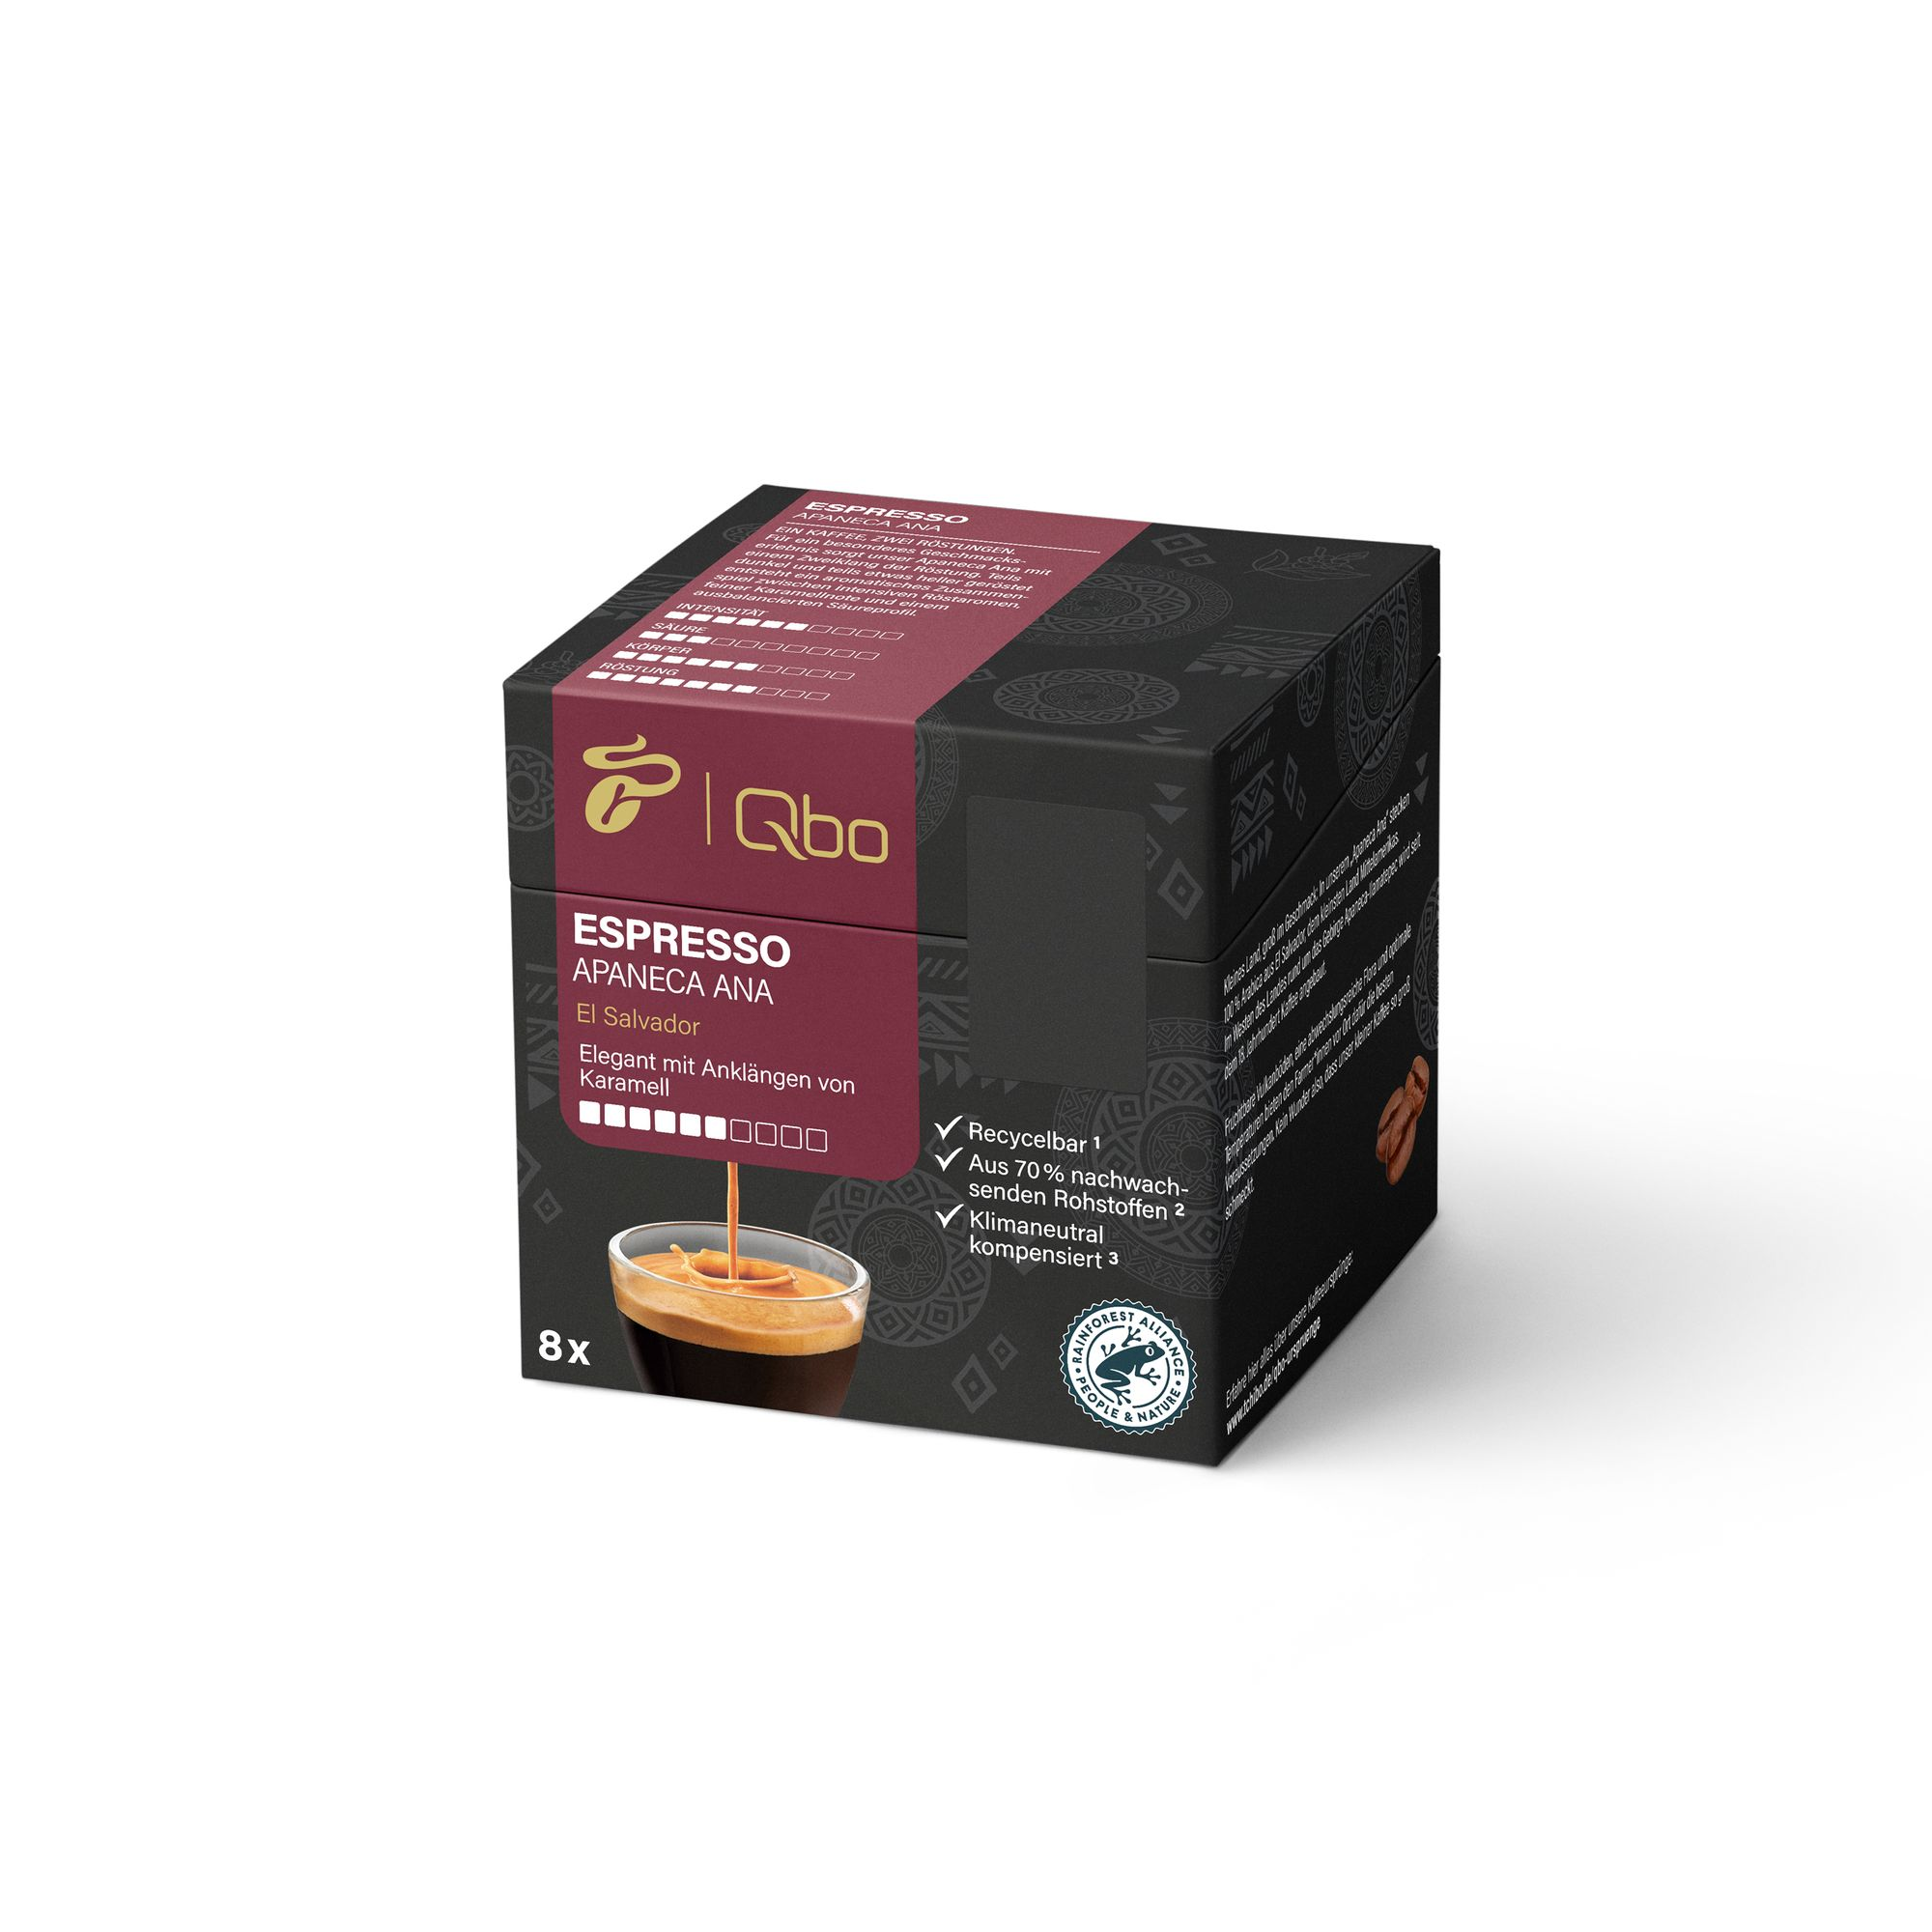 TCHIBO QBO Espresso Apaneca Ana (Tchibo Stück 525902 Kaffeekapseln 8 Qbo Kapselsystem)